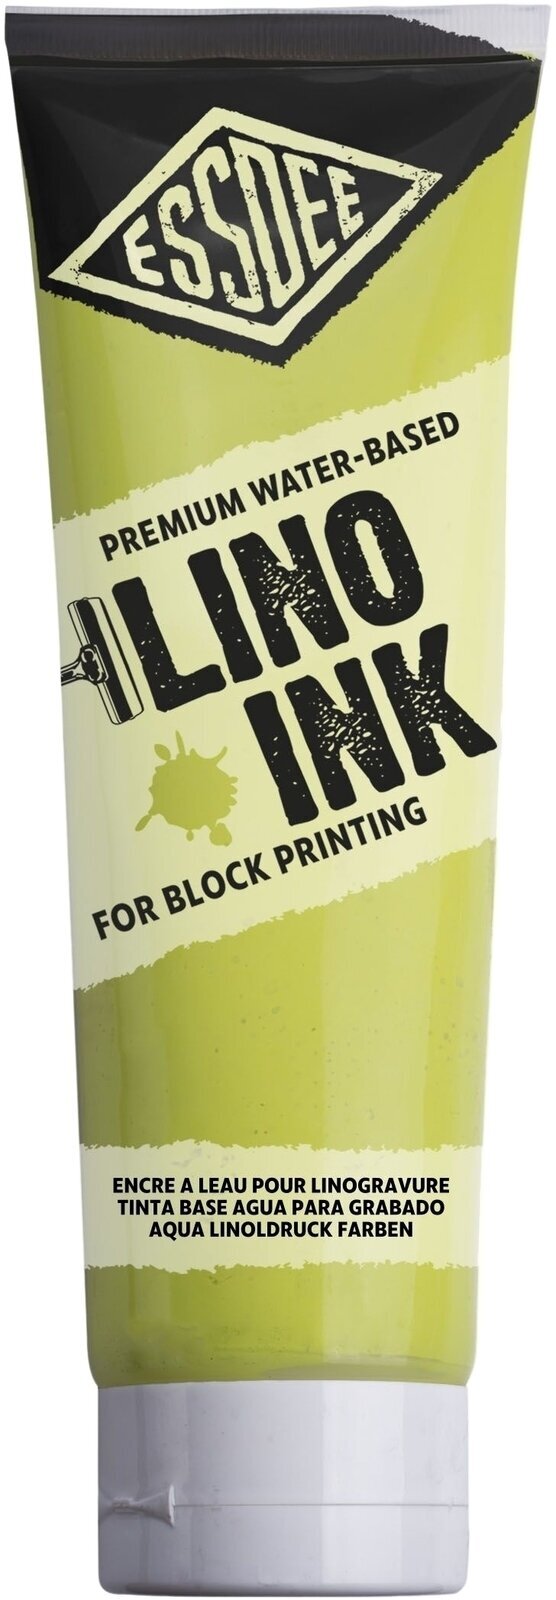 Peintures pour la linogravure Essdee Block Printing Ink Peintures pour la linogravure Fluorescent Yellow 300 ml